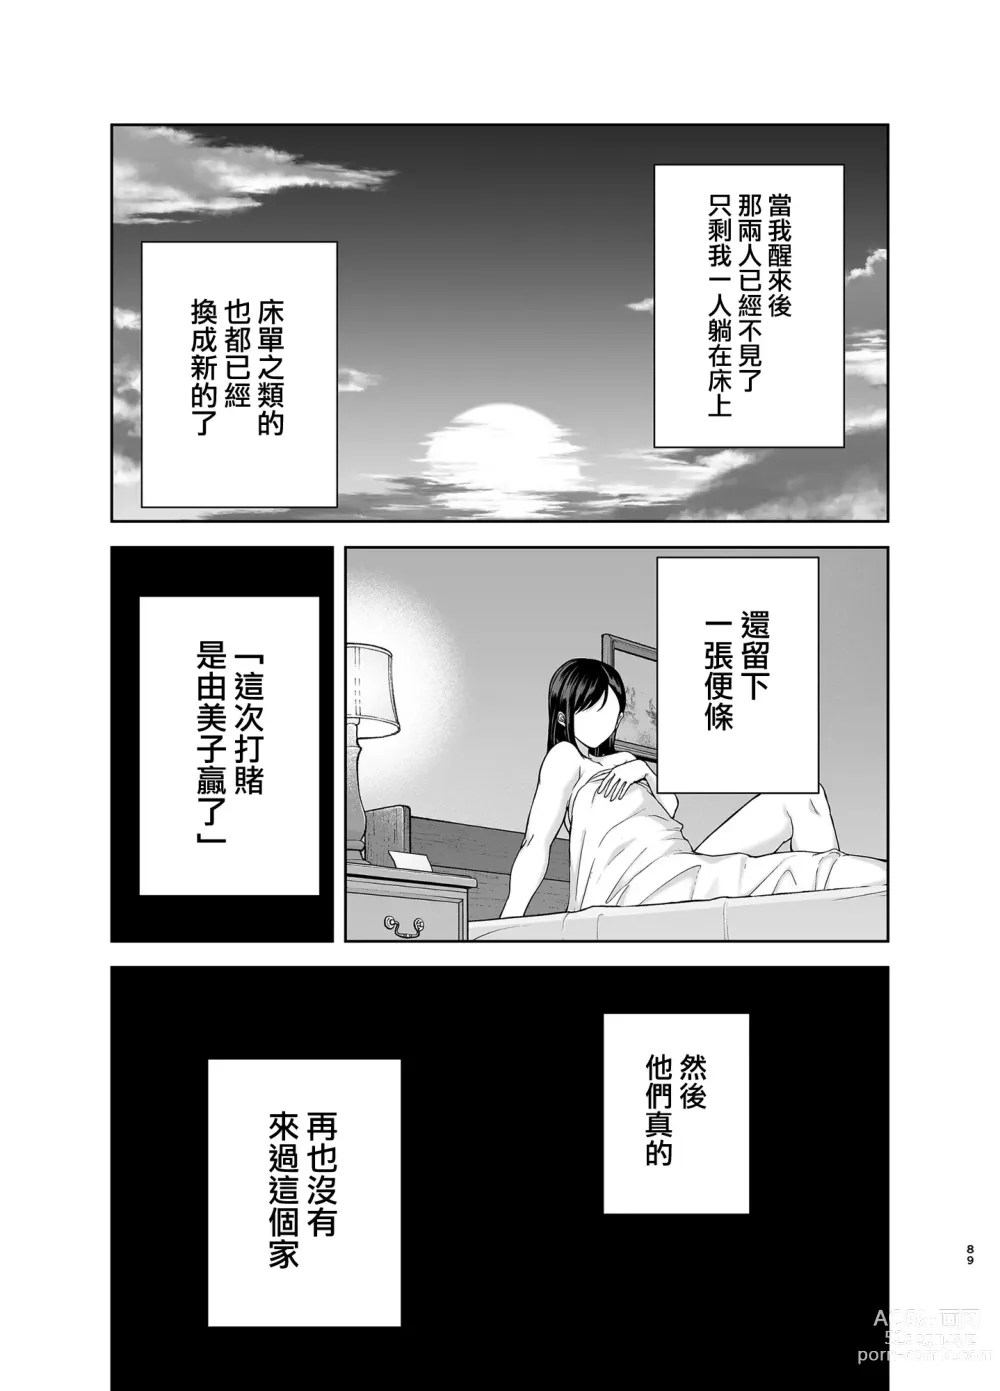 Page 88 of doujinshi sdasd